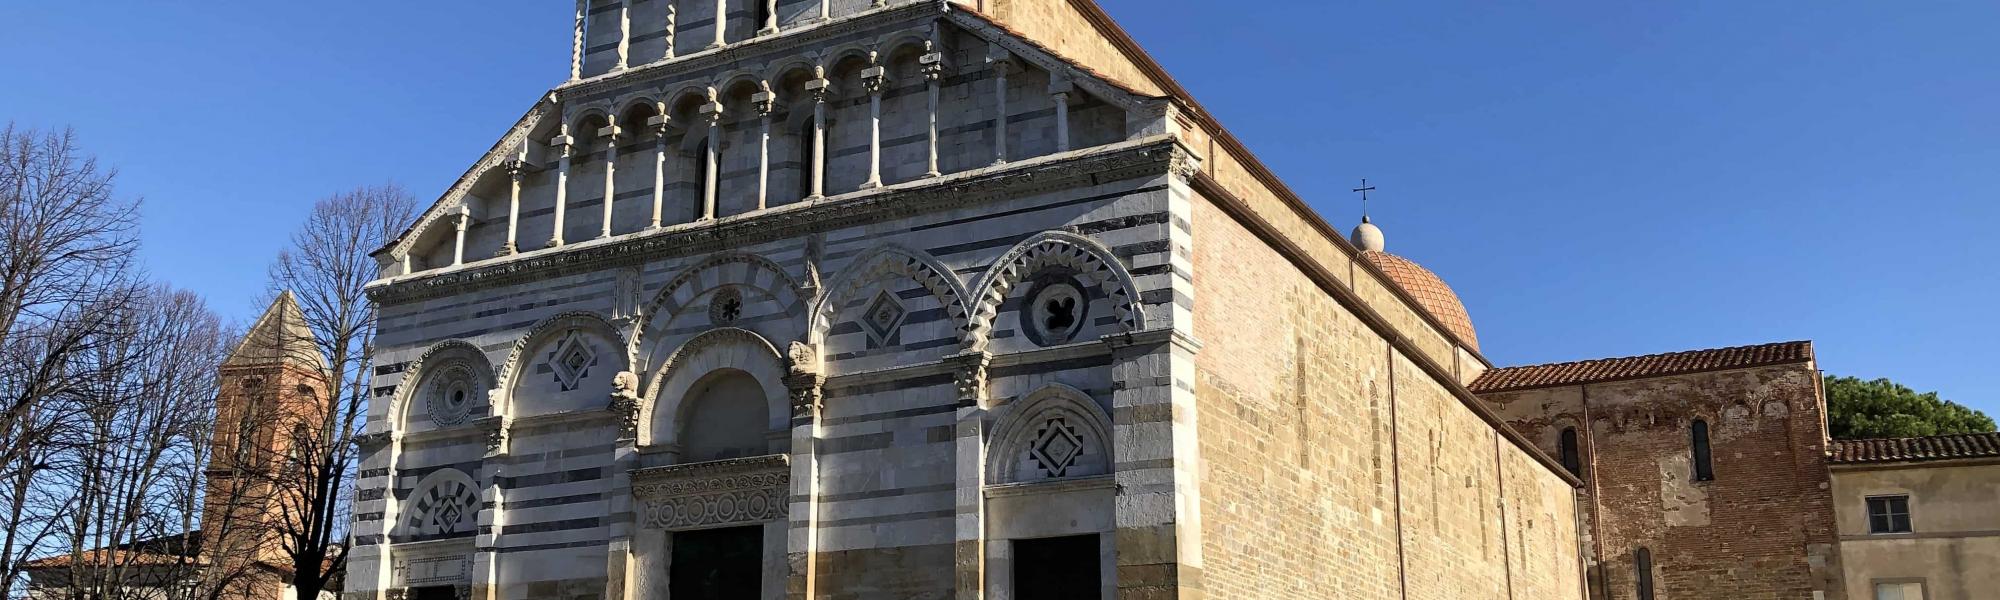 Chiesa di San Paolo a Ripa d’Arno 